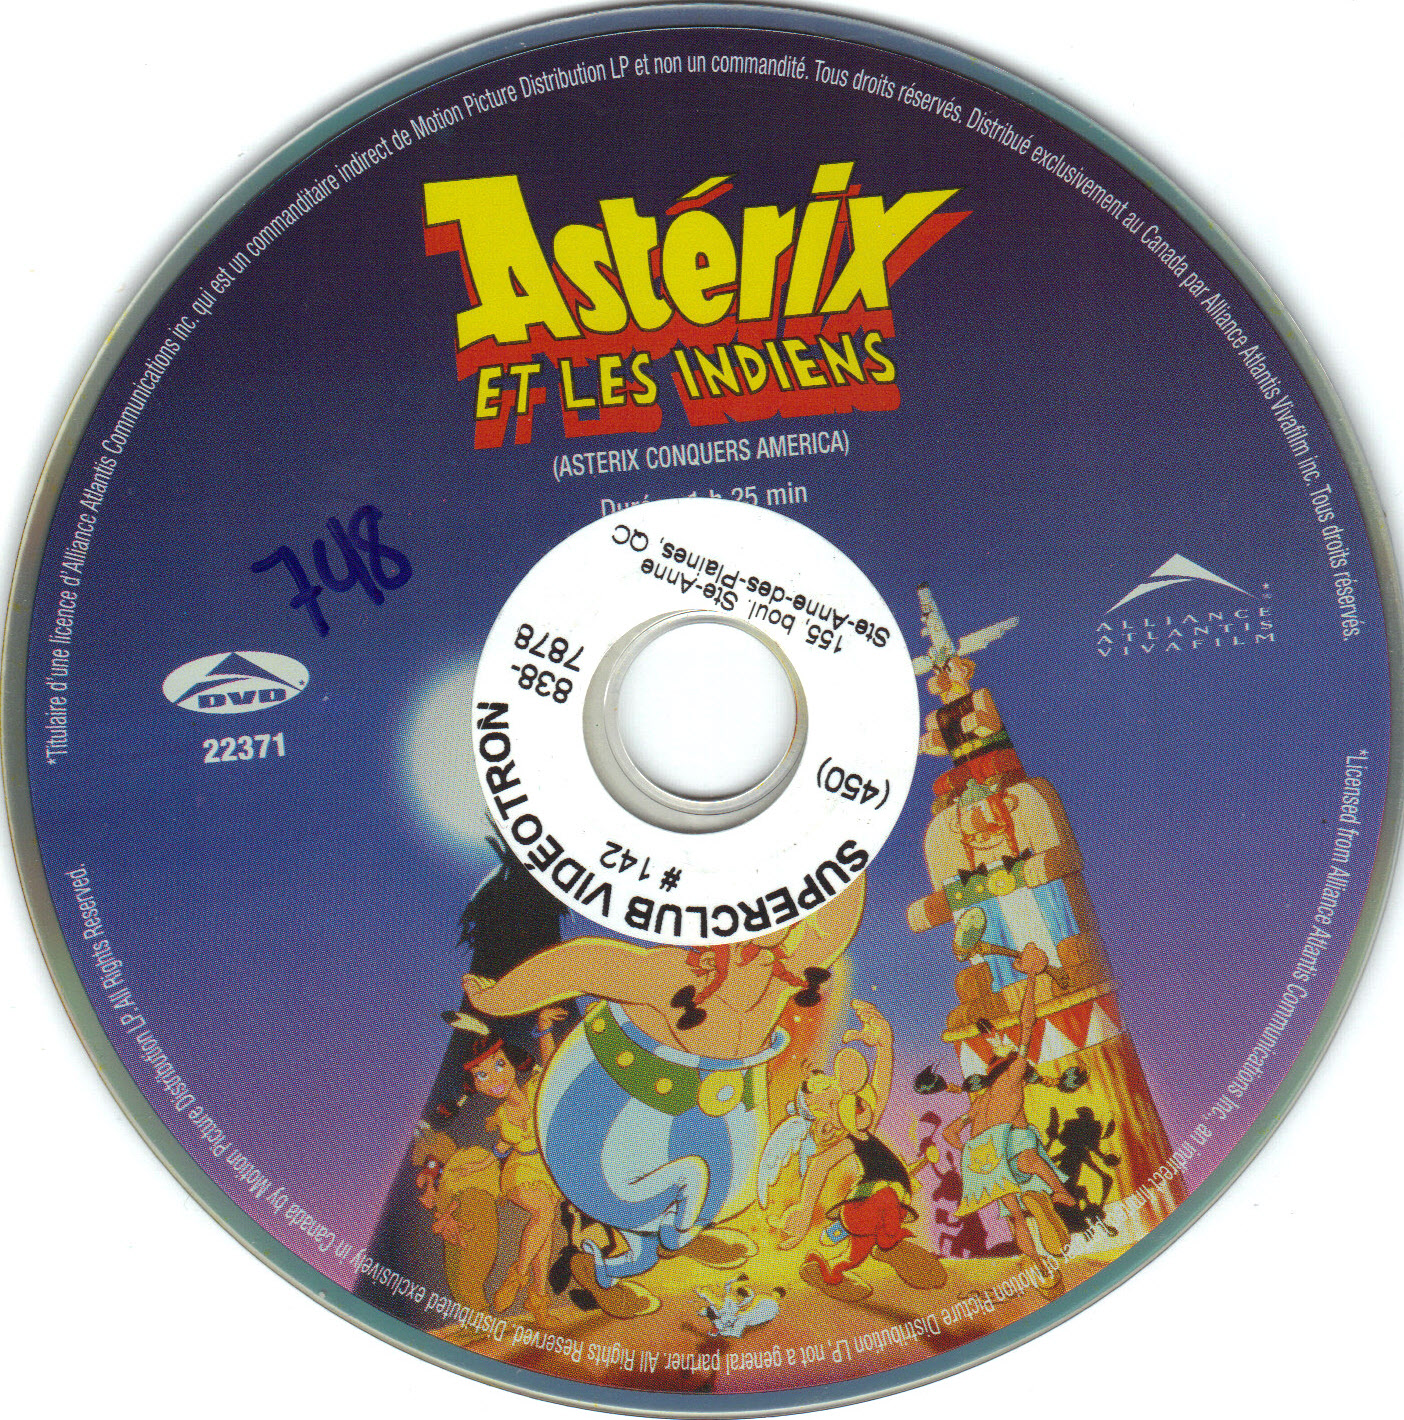 Asterix et les Indiens v2